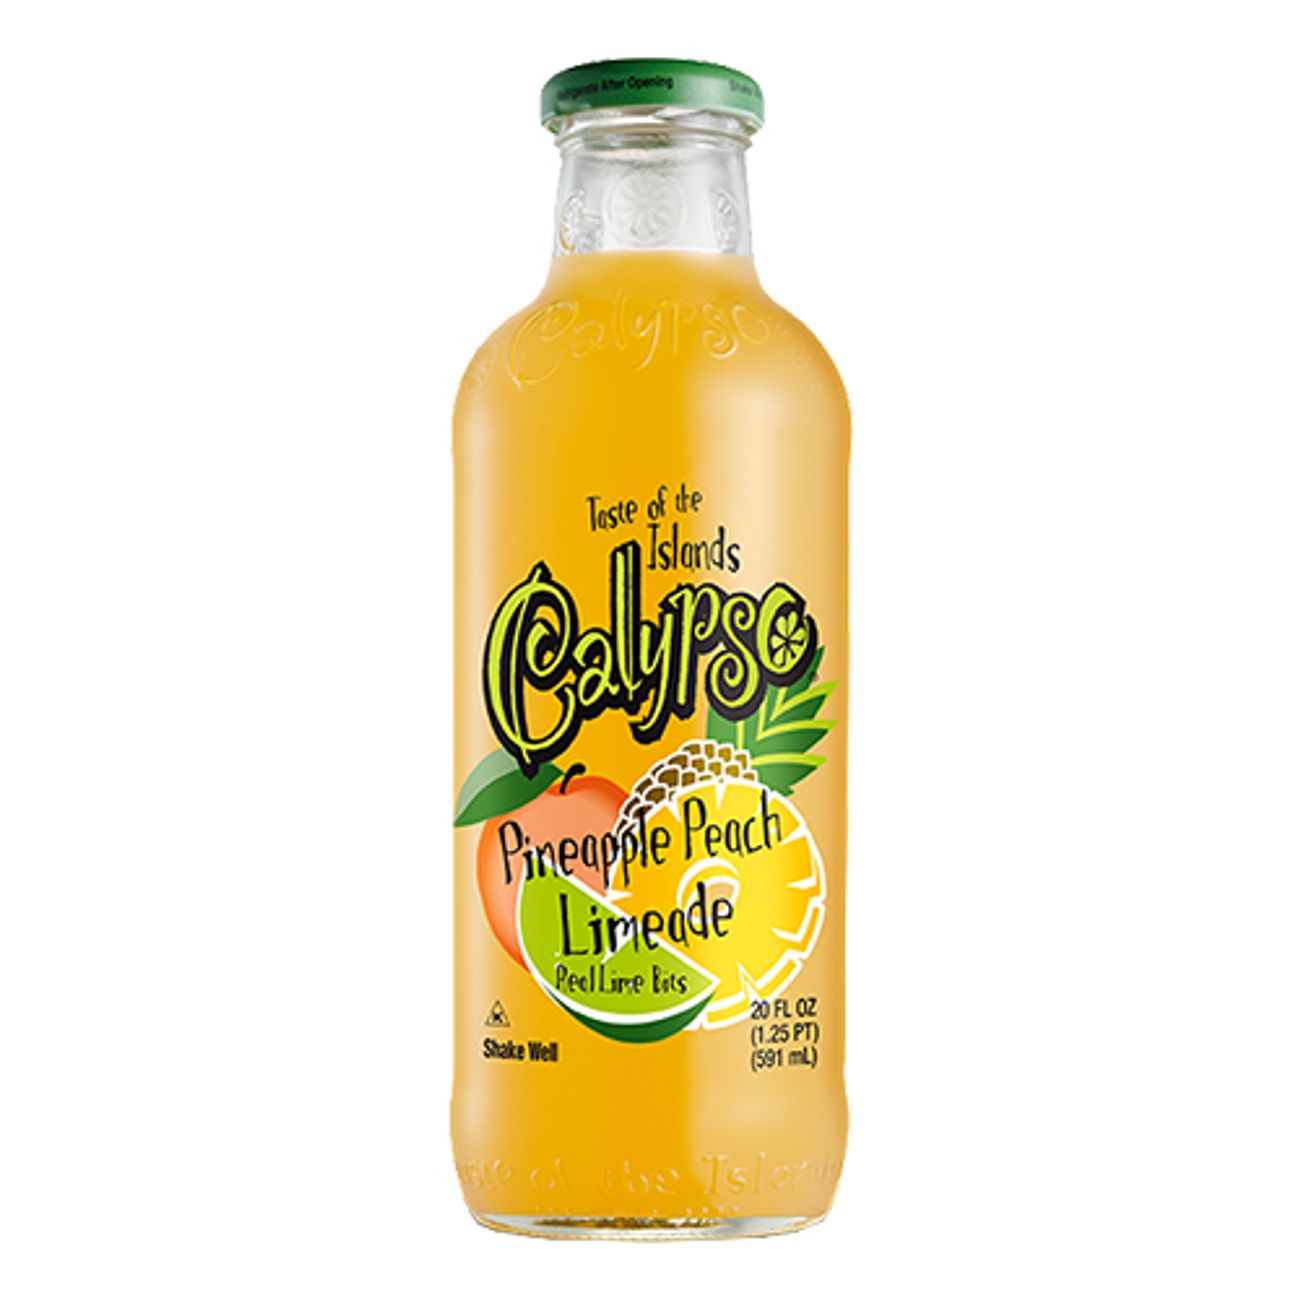 calypso-pineapple-peach-limeade-1